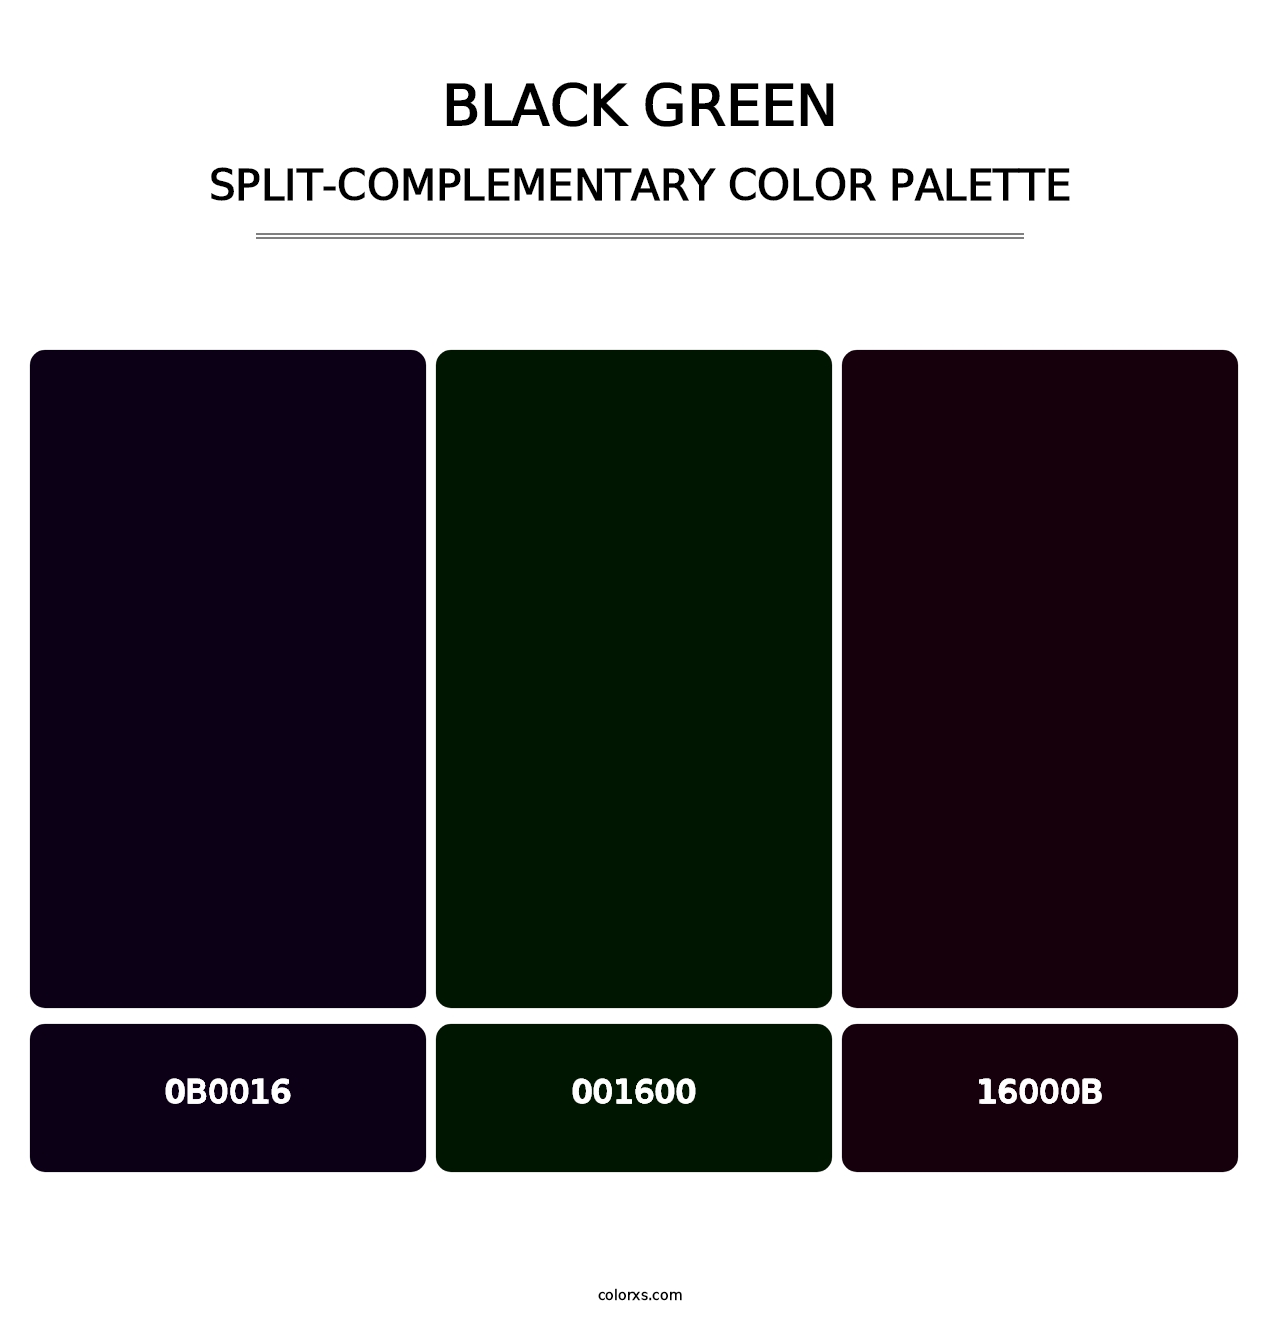 Black Green - Split-Complementary Color Palette